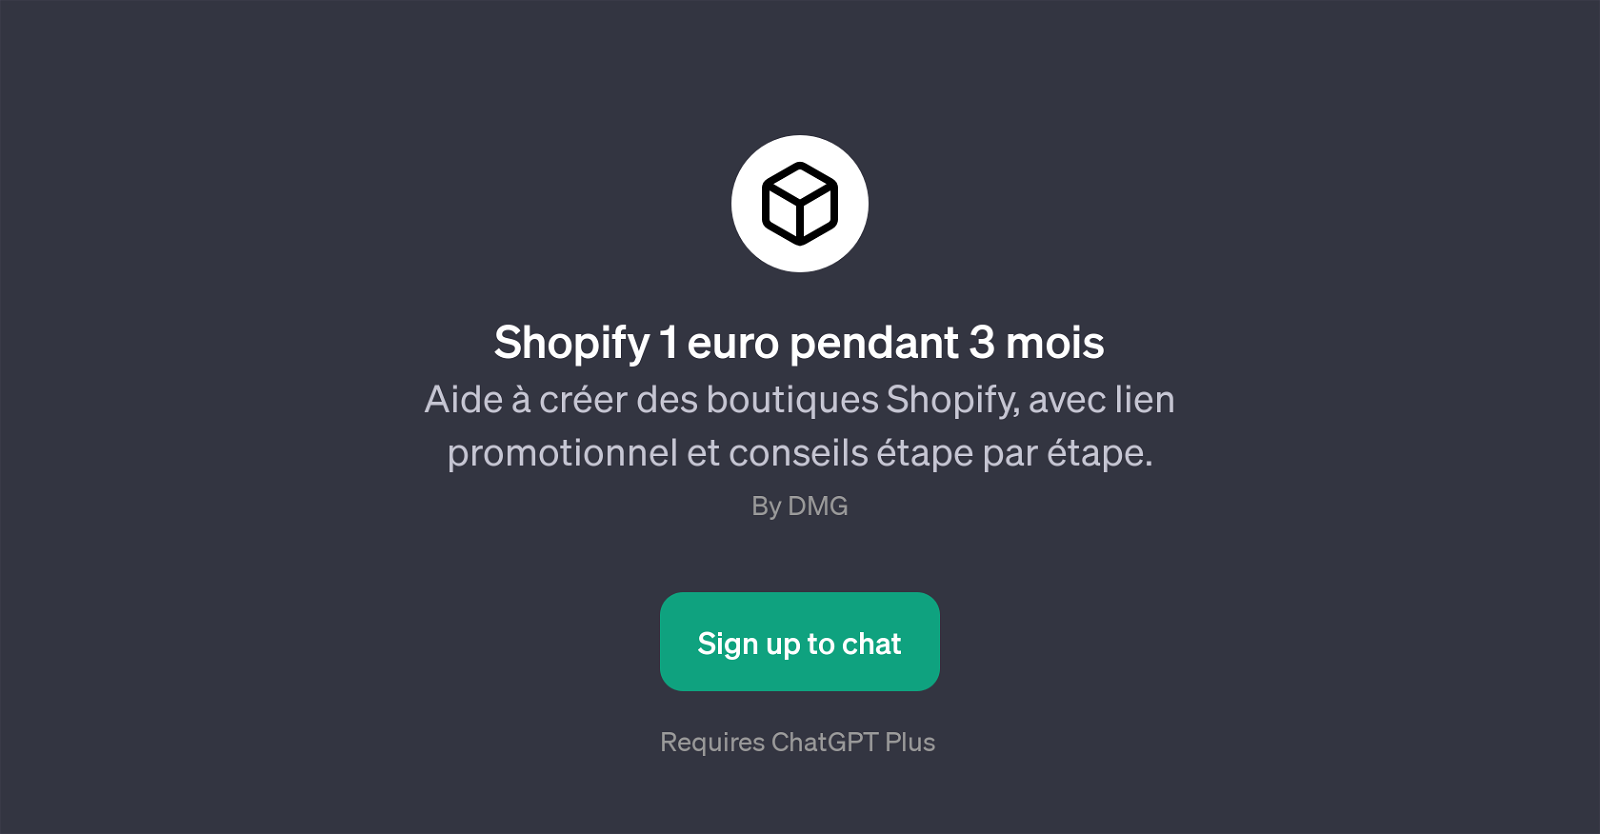 Shopify 1 euro pendant 3 mois website